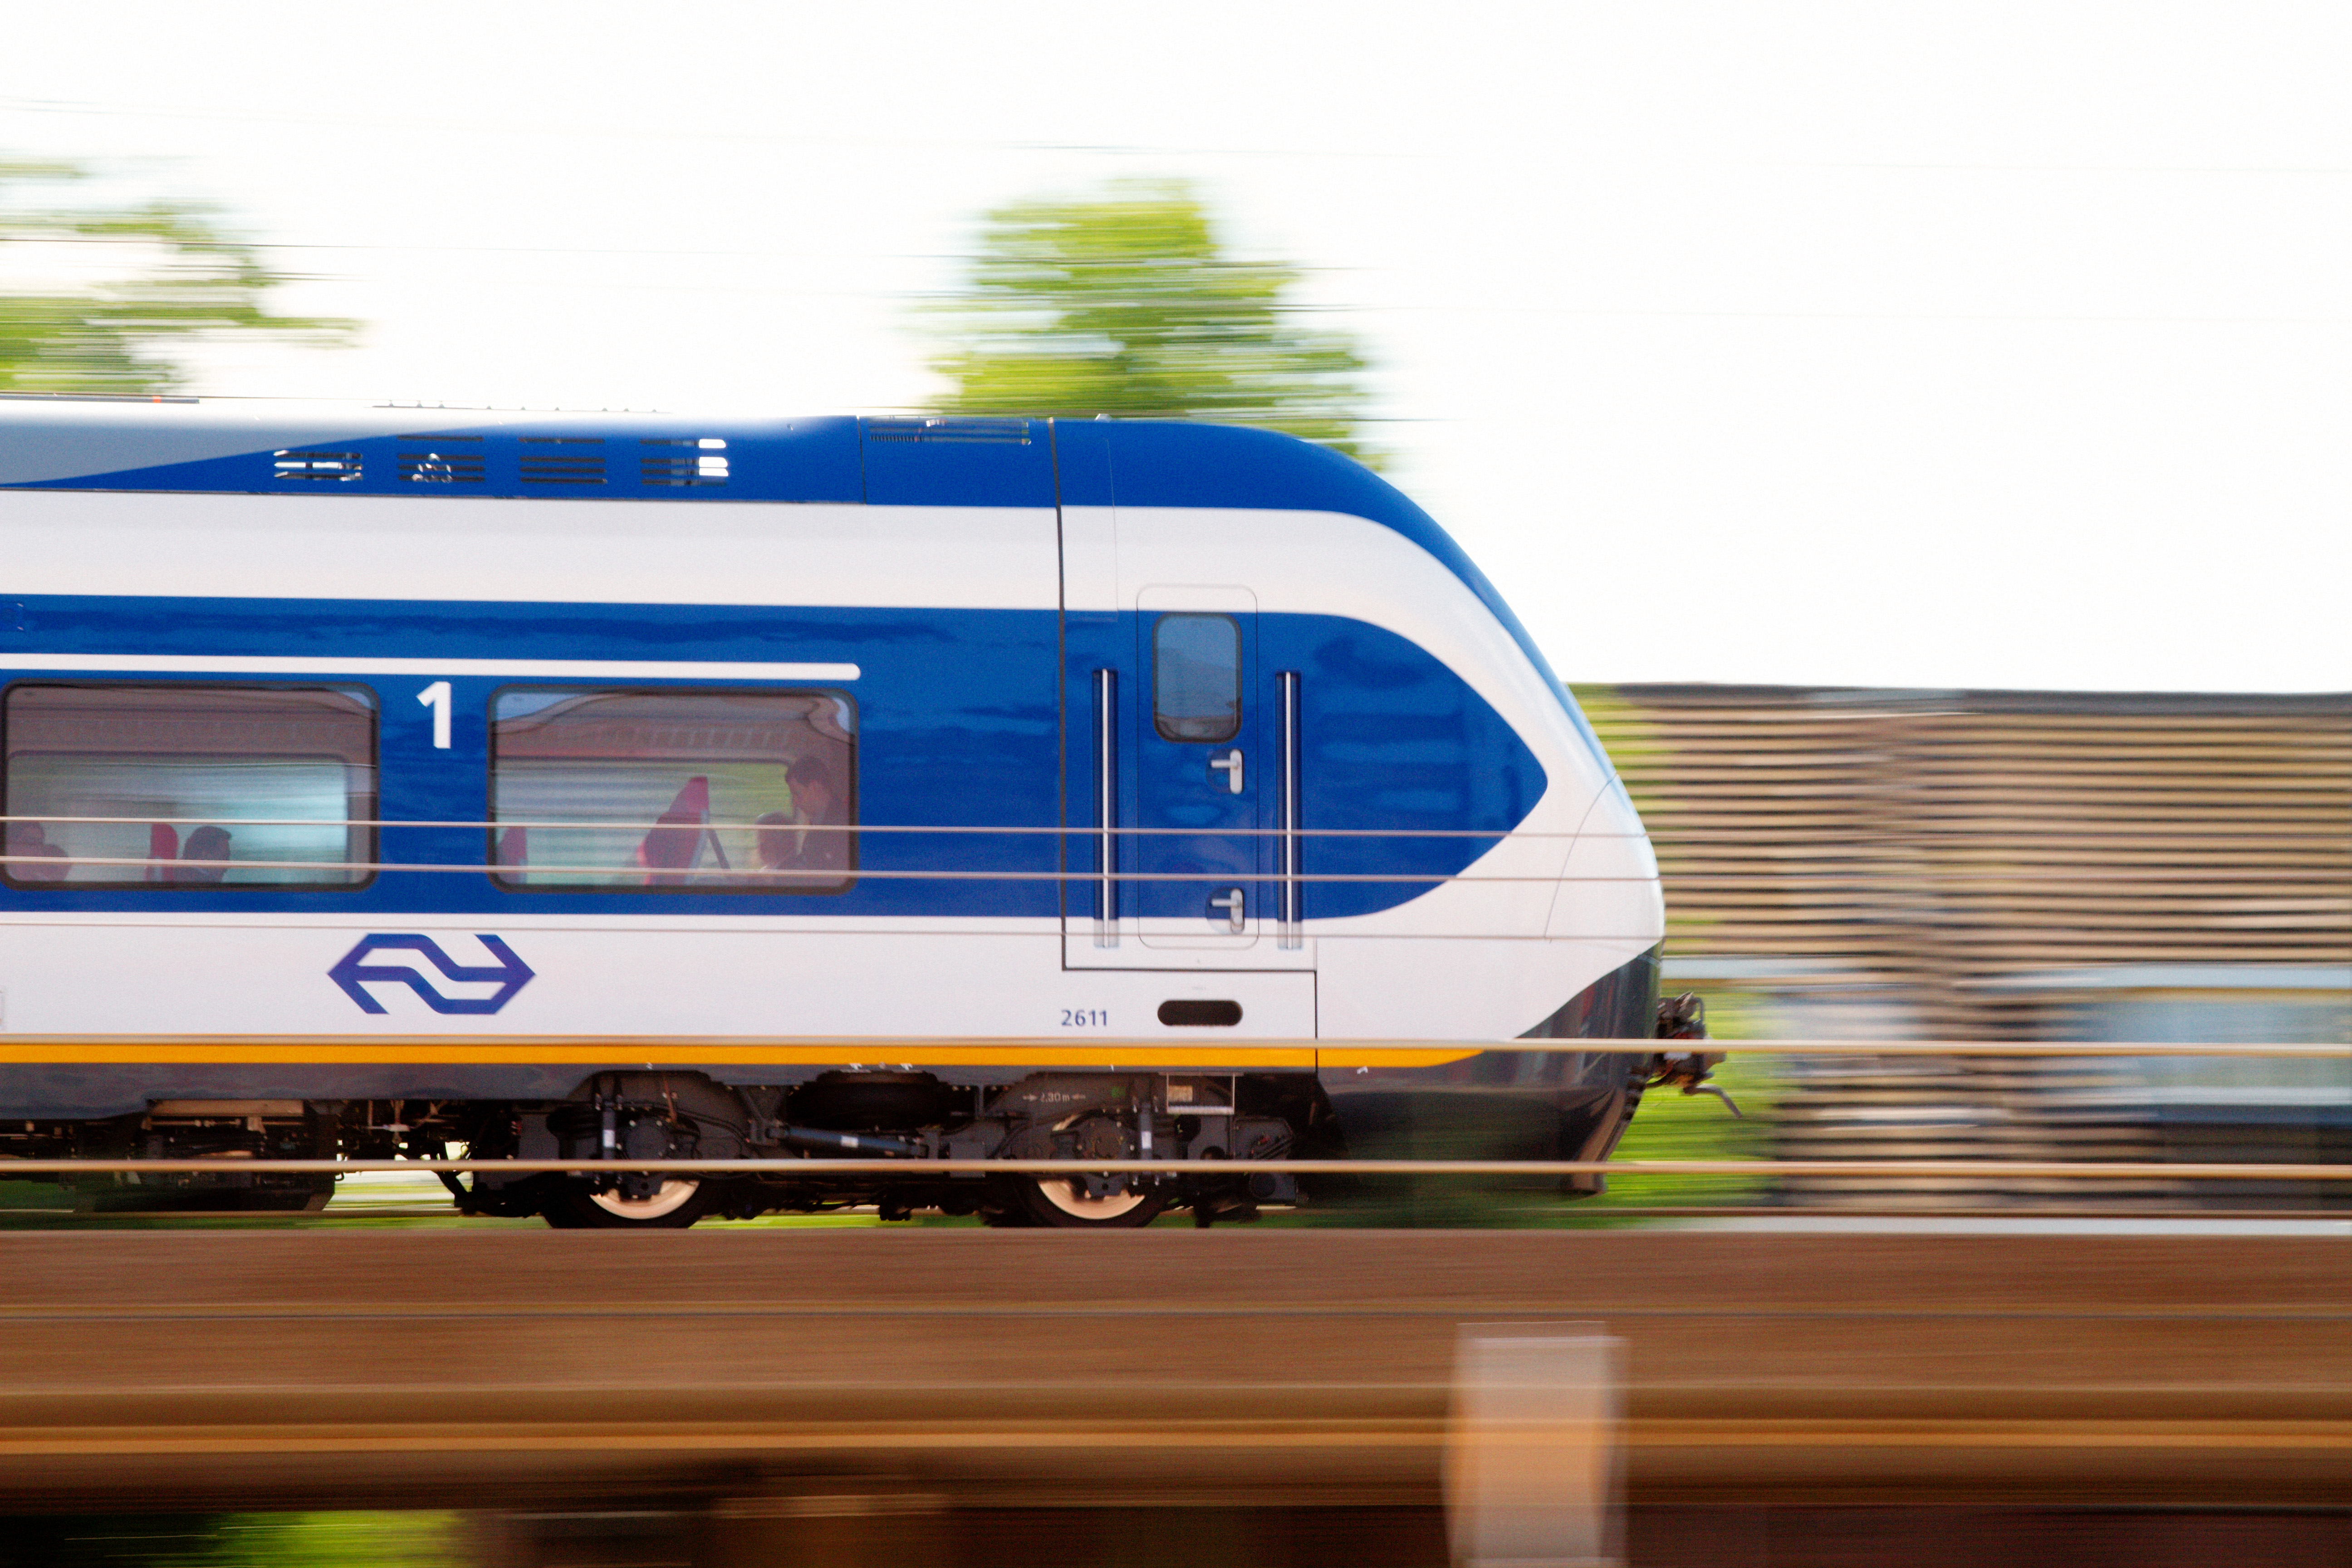 File:Fast train (4712207733).jpg - Wikimedia Commons